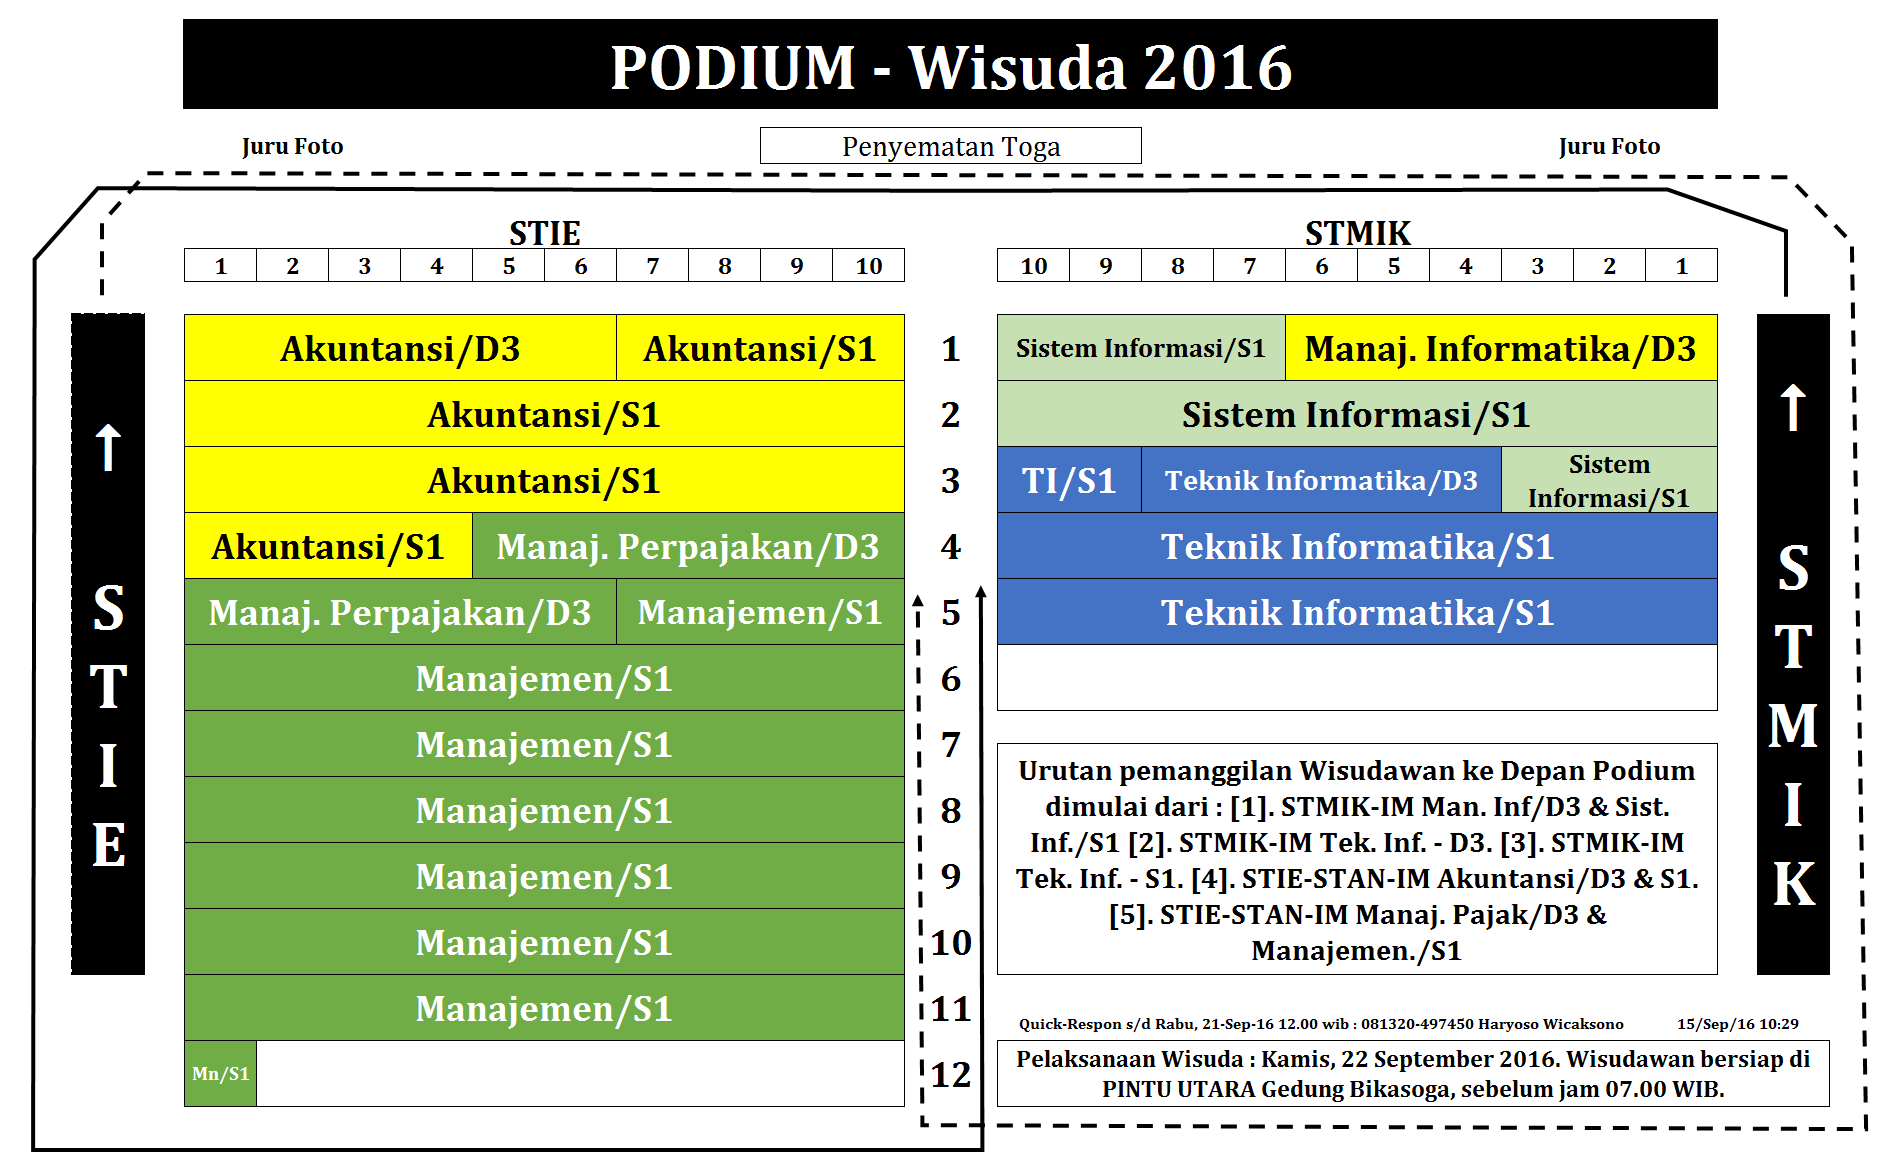 wisuda-2016-denah-1